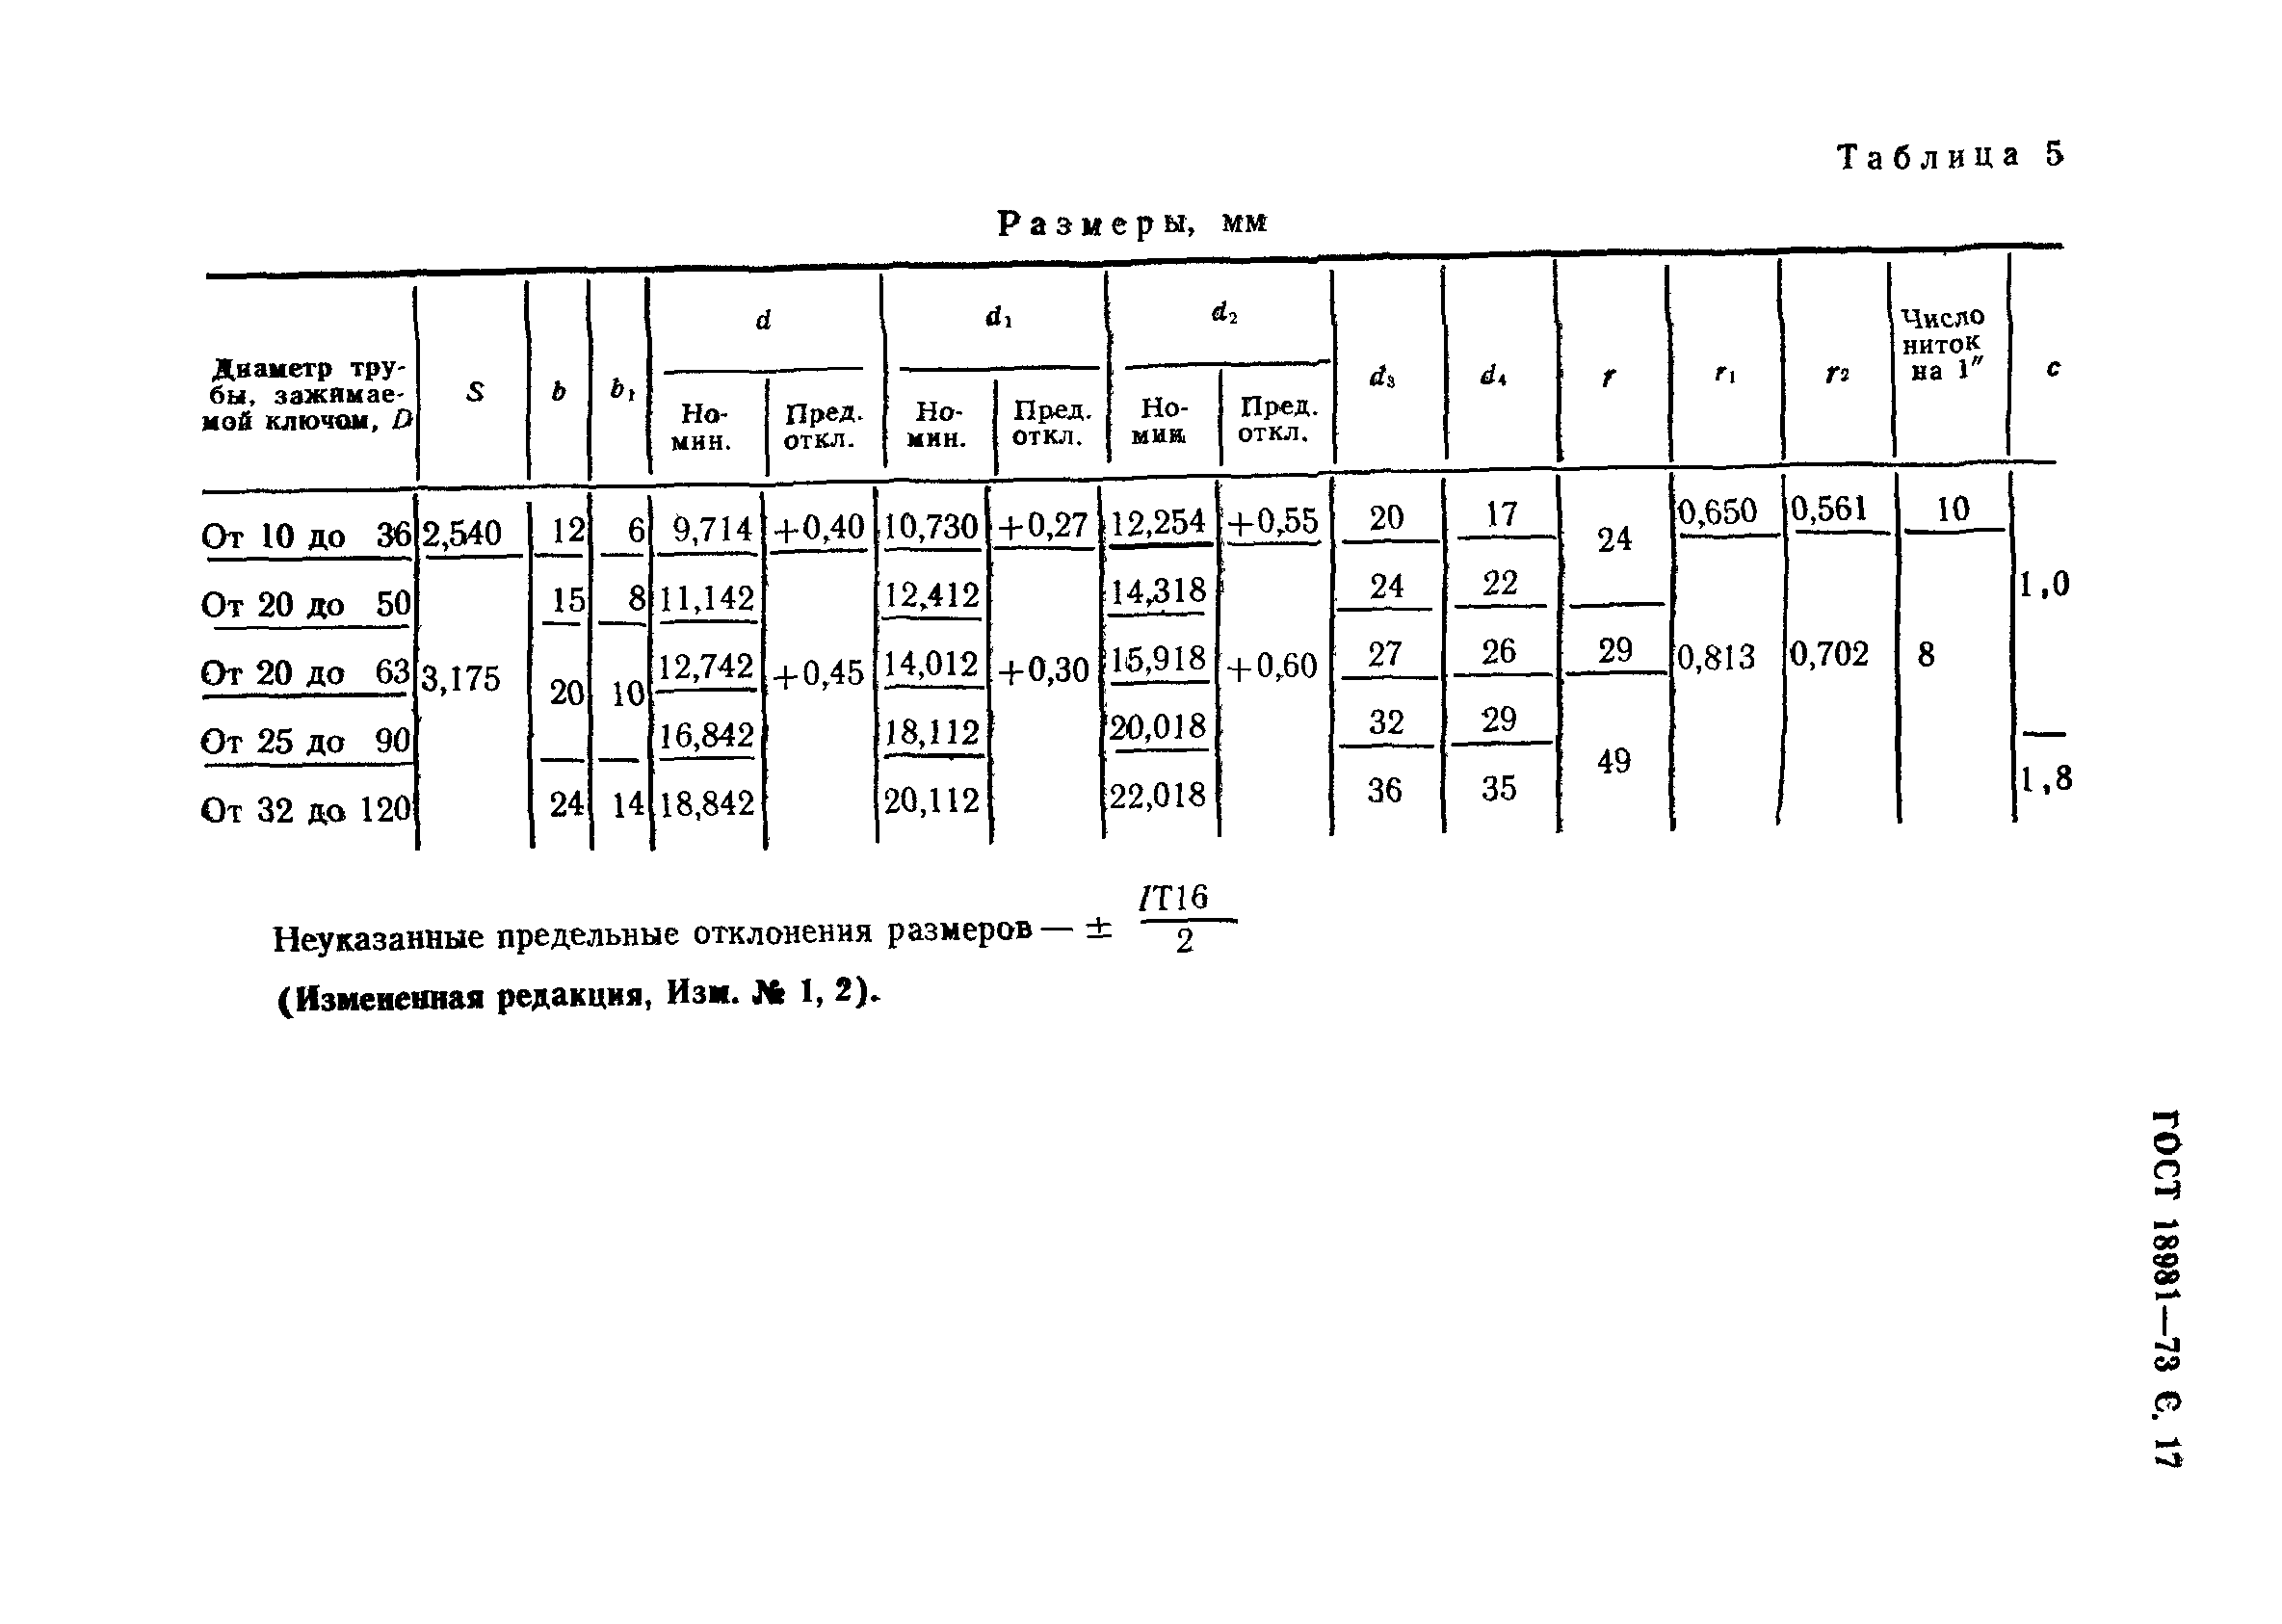 ГОСТ 18981-73